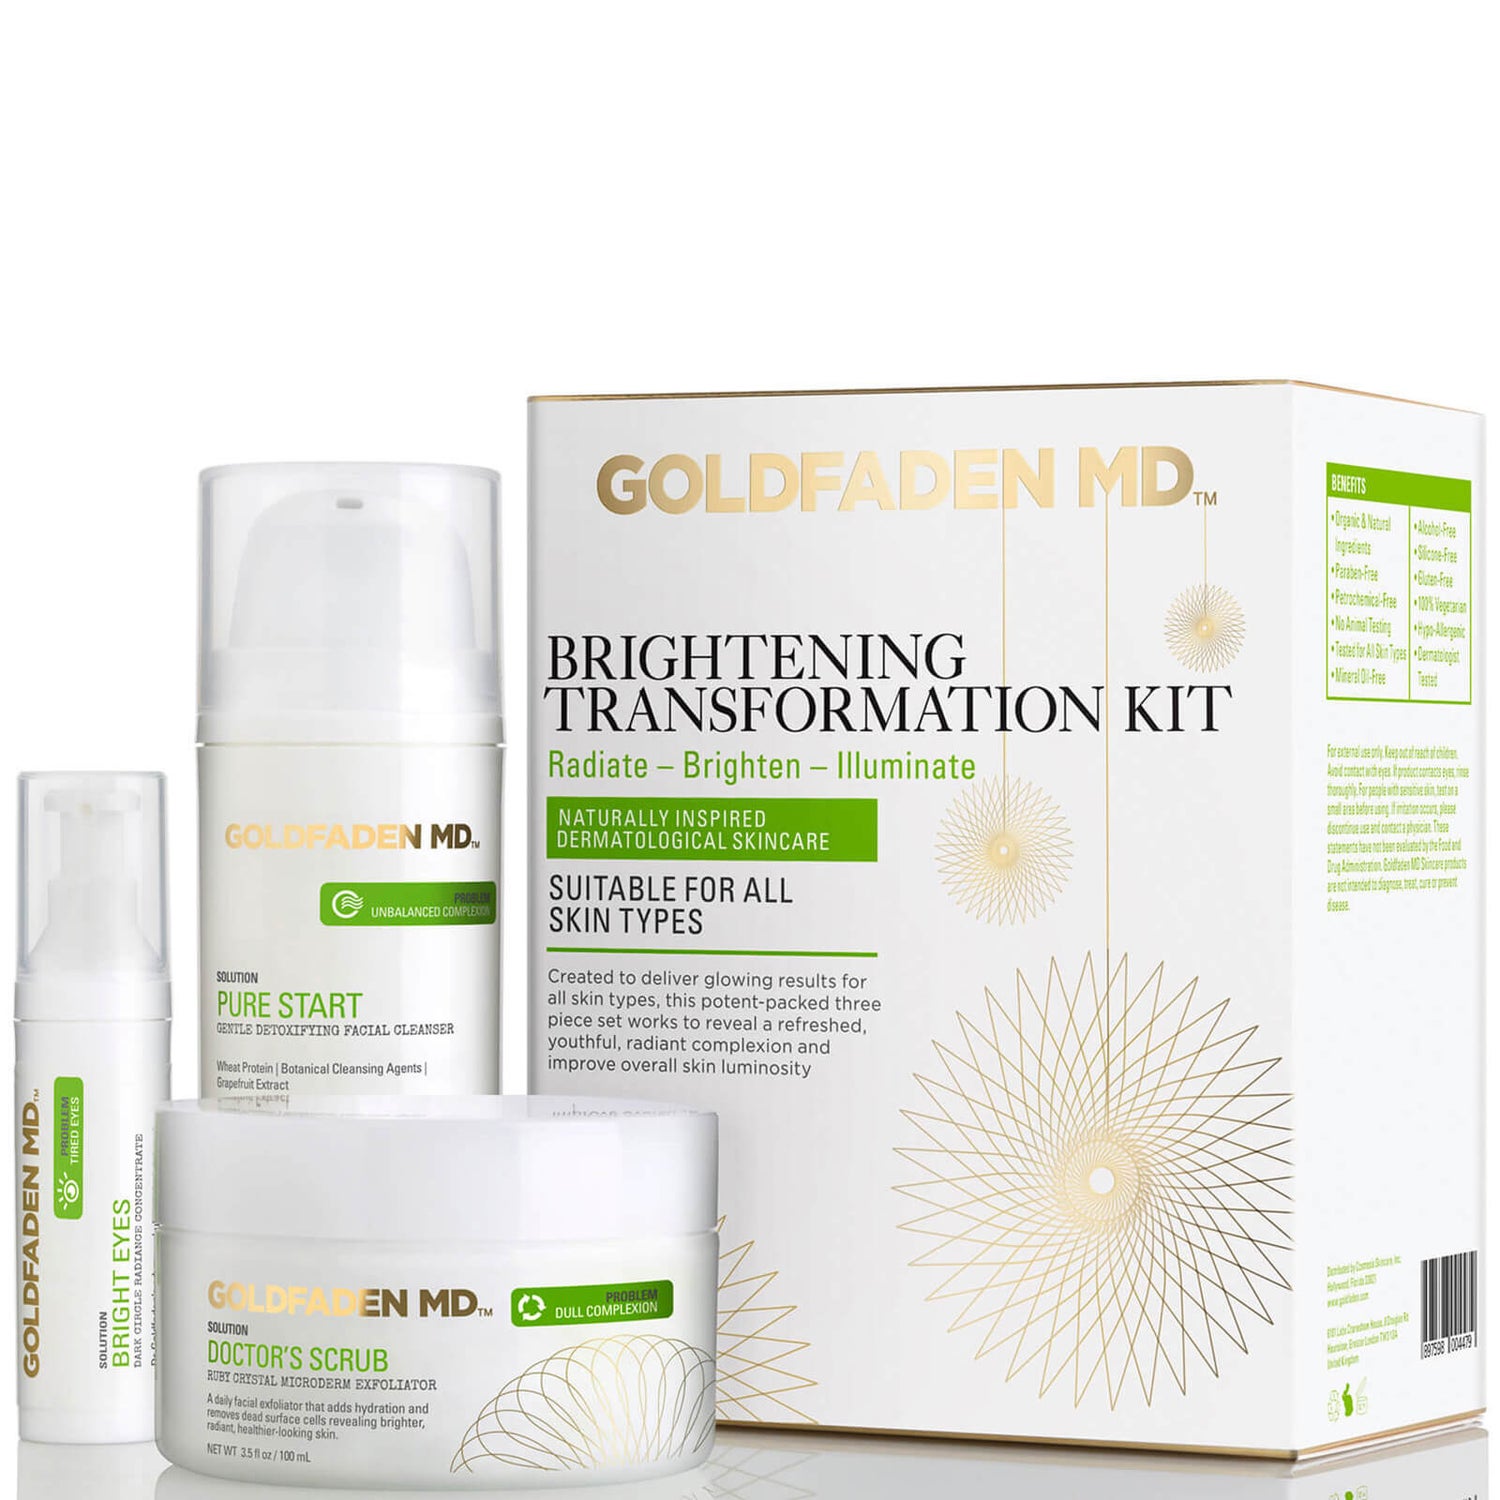 Goldfaden MD Brightening Transformation Kit